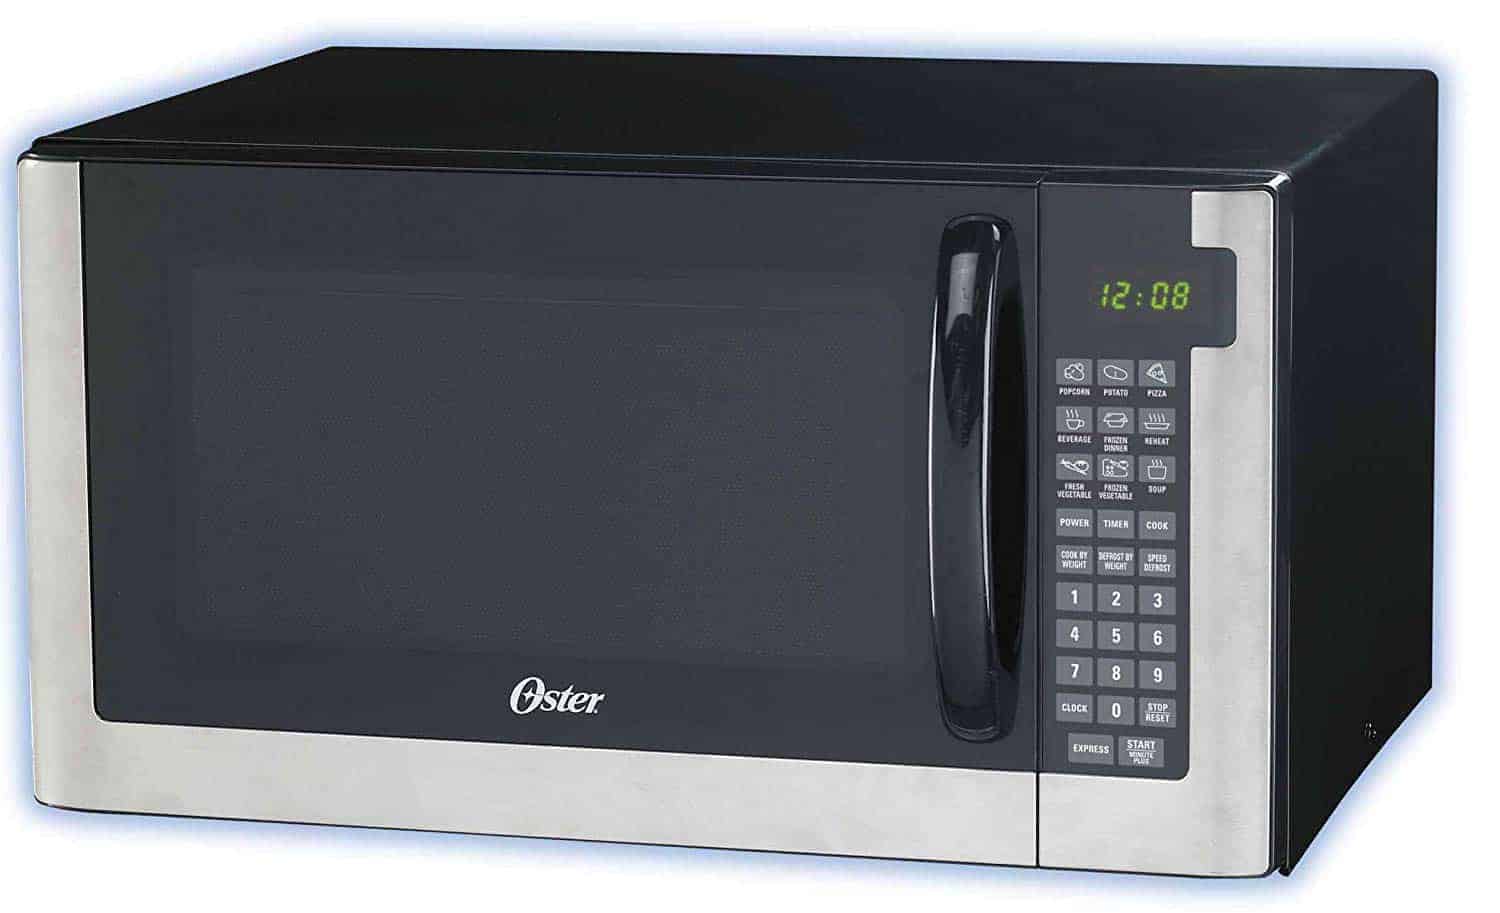 The Best Countertop Microwaves